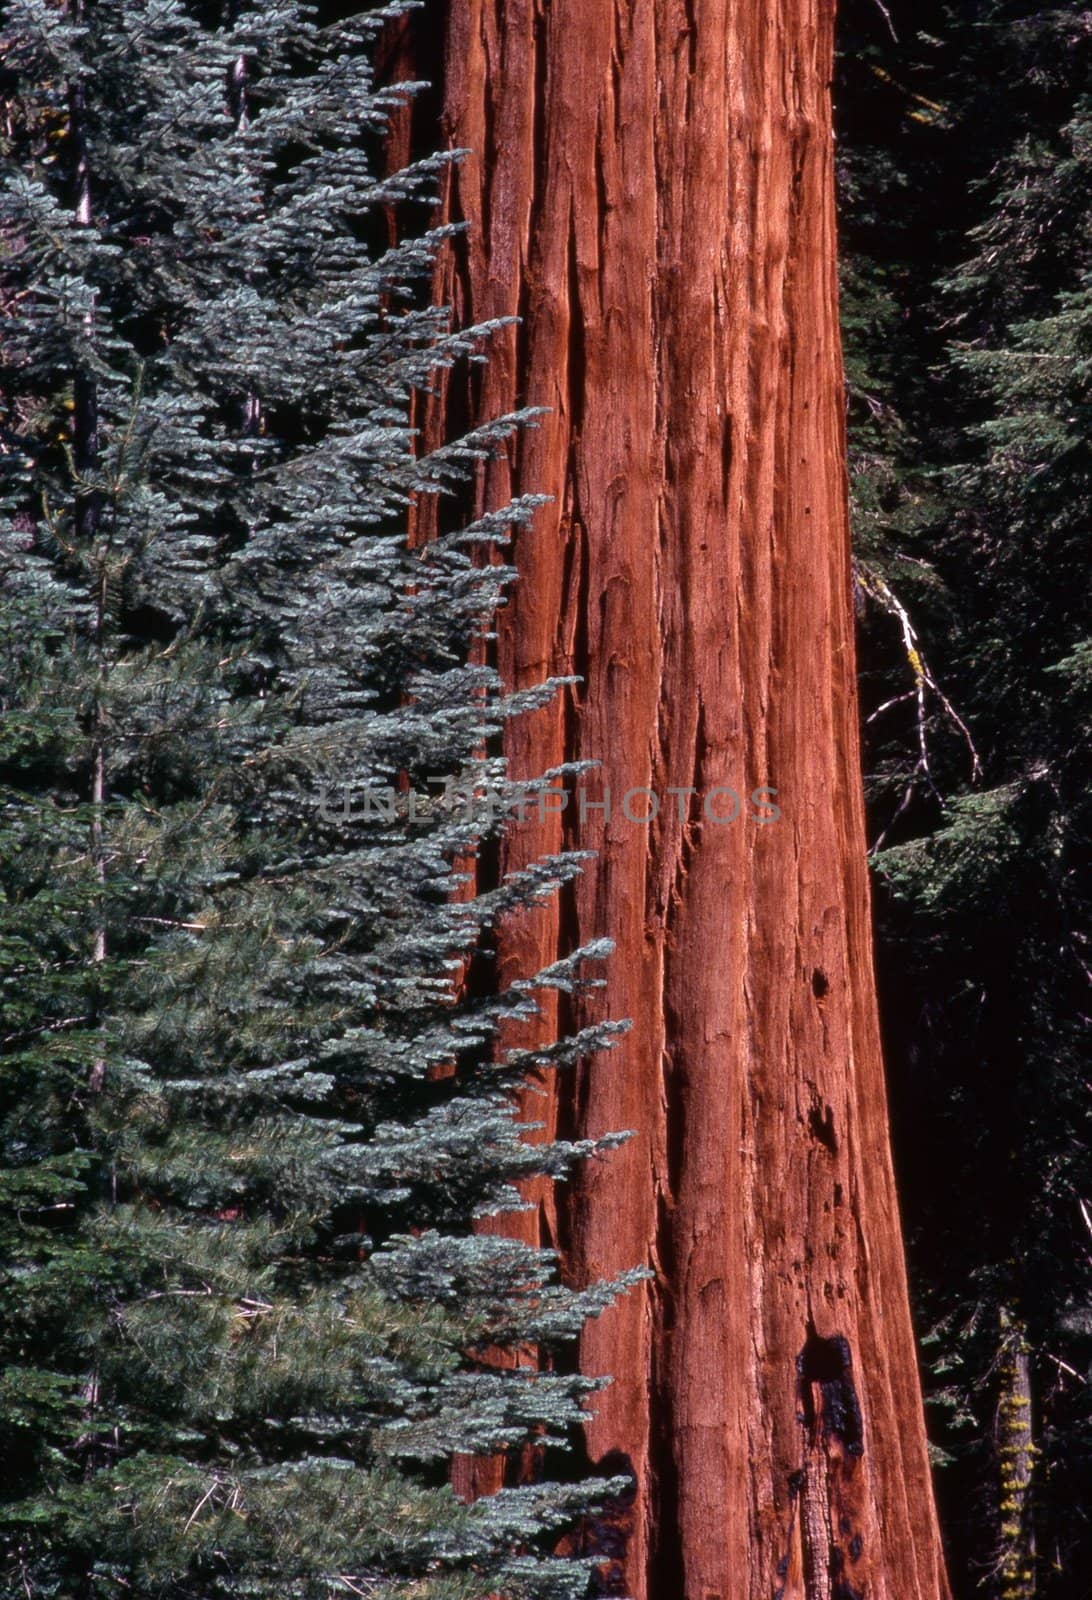 Sequoia, California by jol66